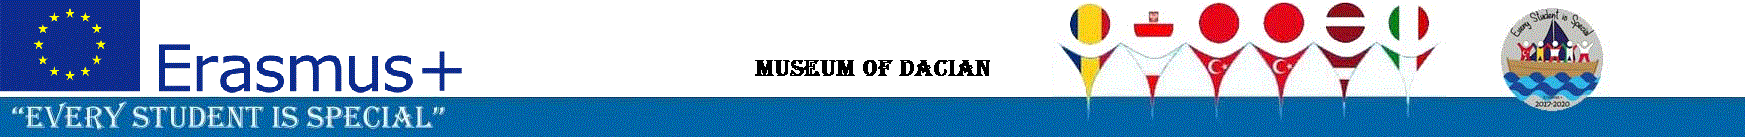 Museum of Dacian